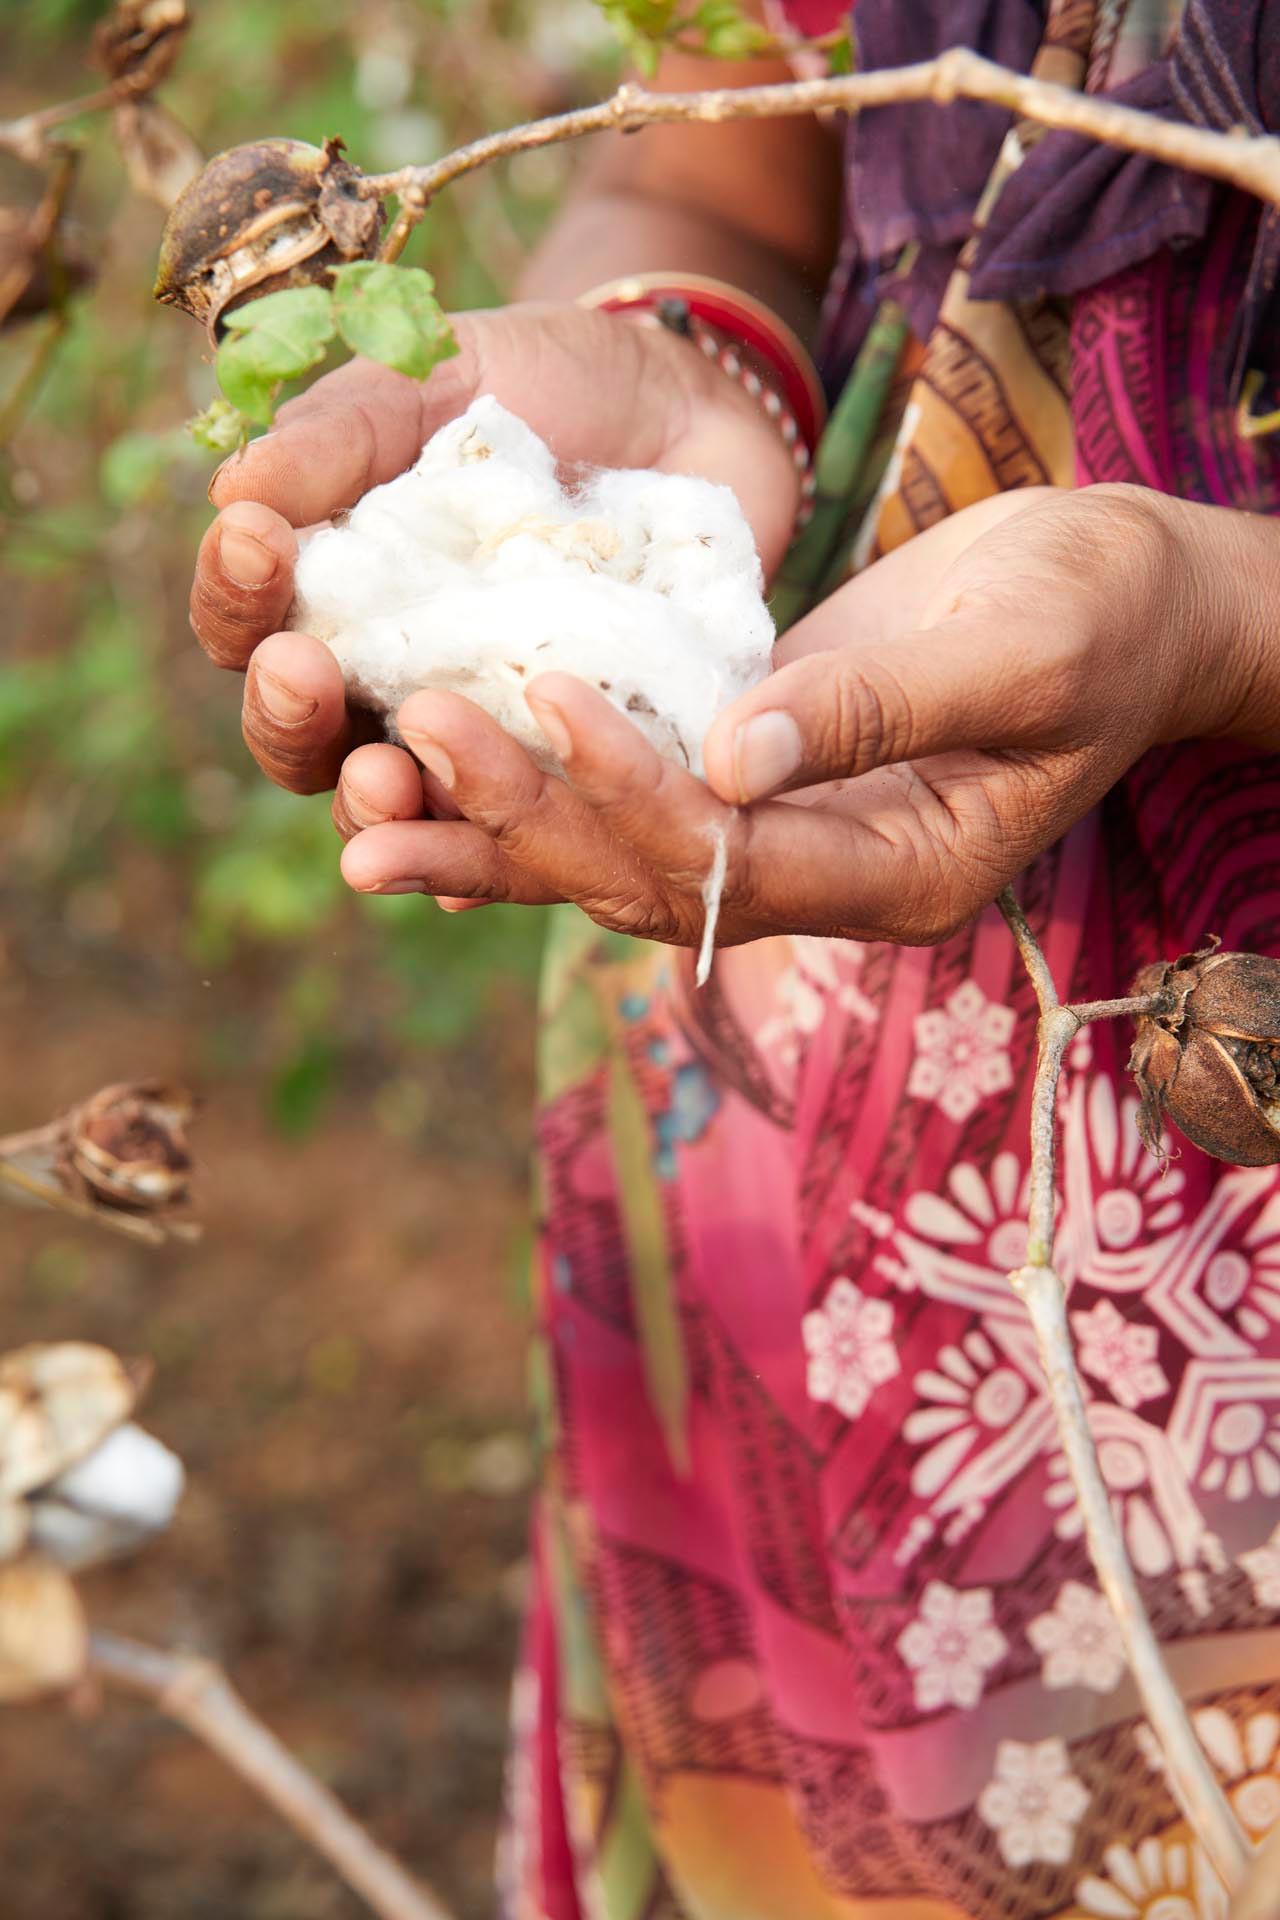 Meet a Primark Sustainable Cotton Farmer - Primark Cares